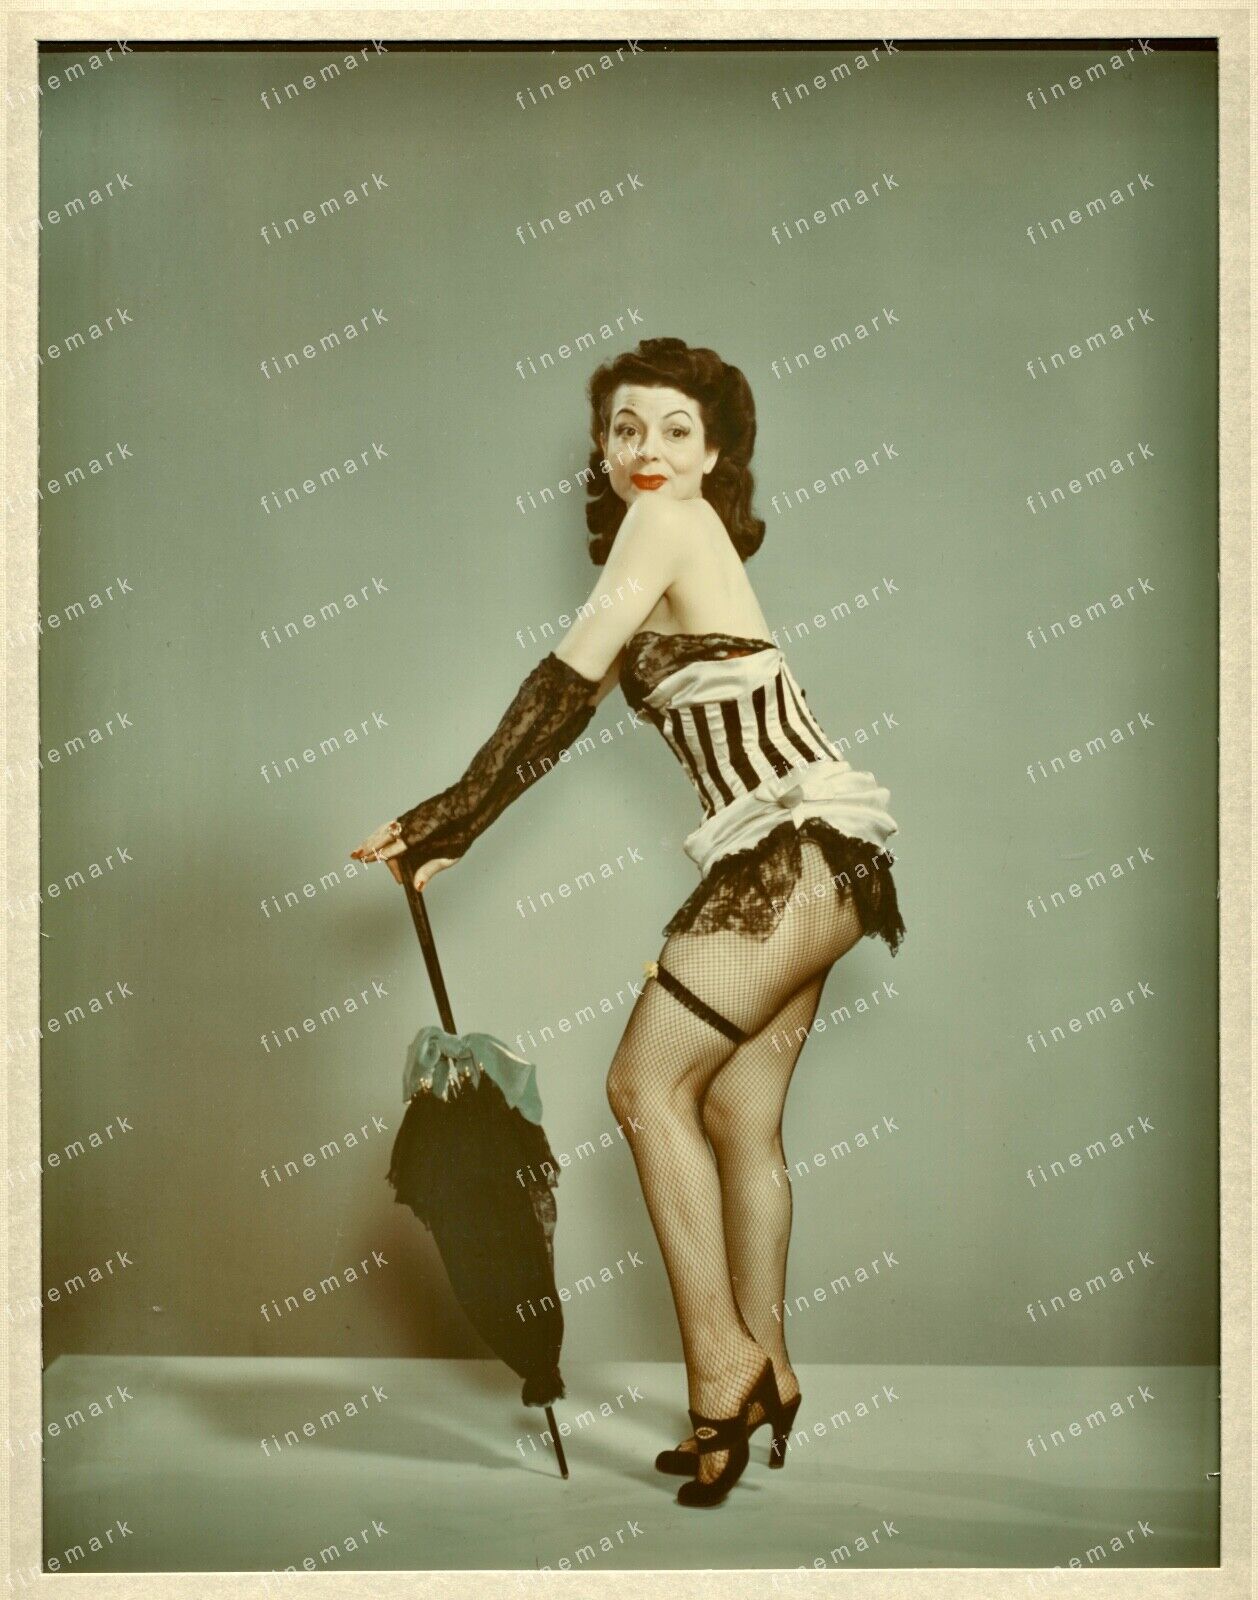 1950 PHOTOGRAPH VINTAGE ORIGINAL ROSE LA ROSE BURLESQUE ANSCO HIGH GLOSS COLOR 5